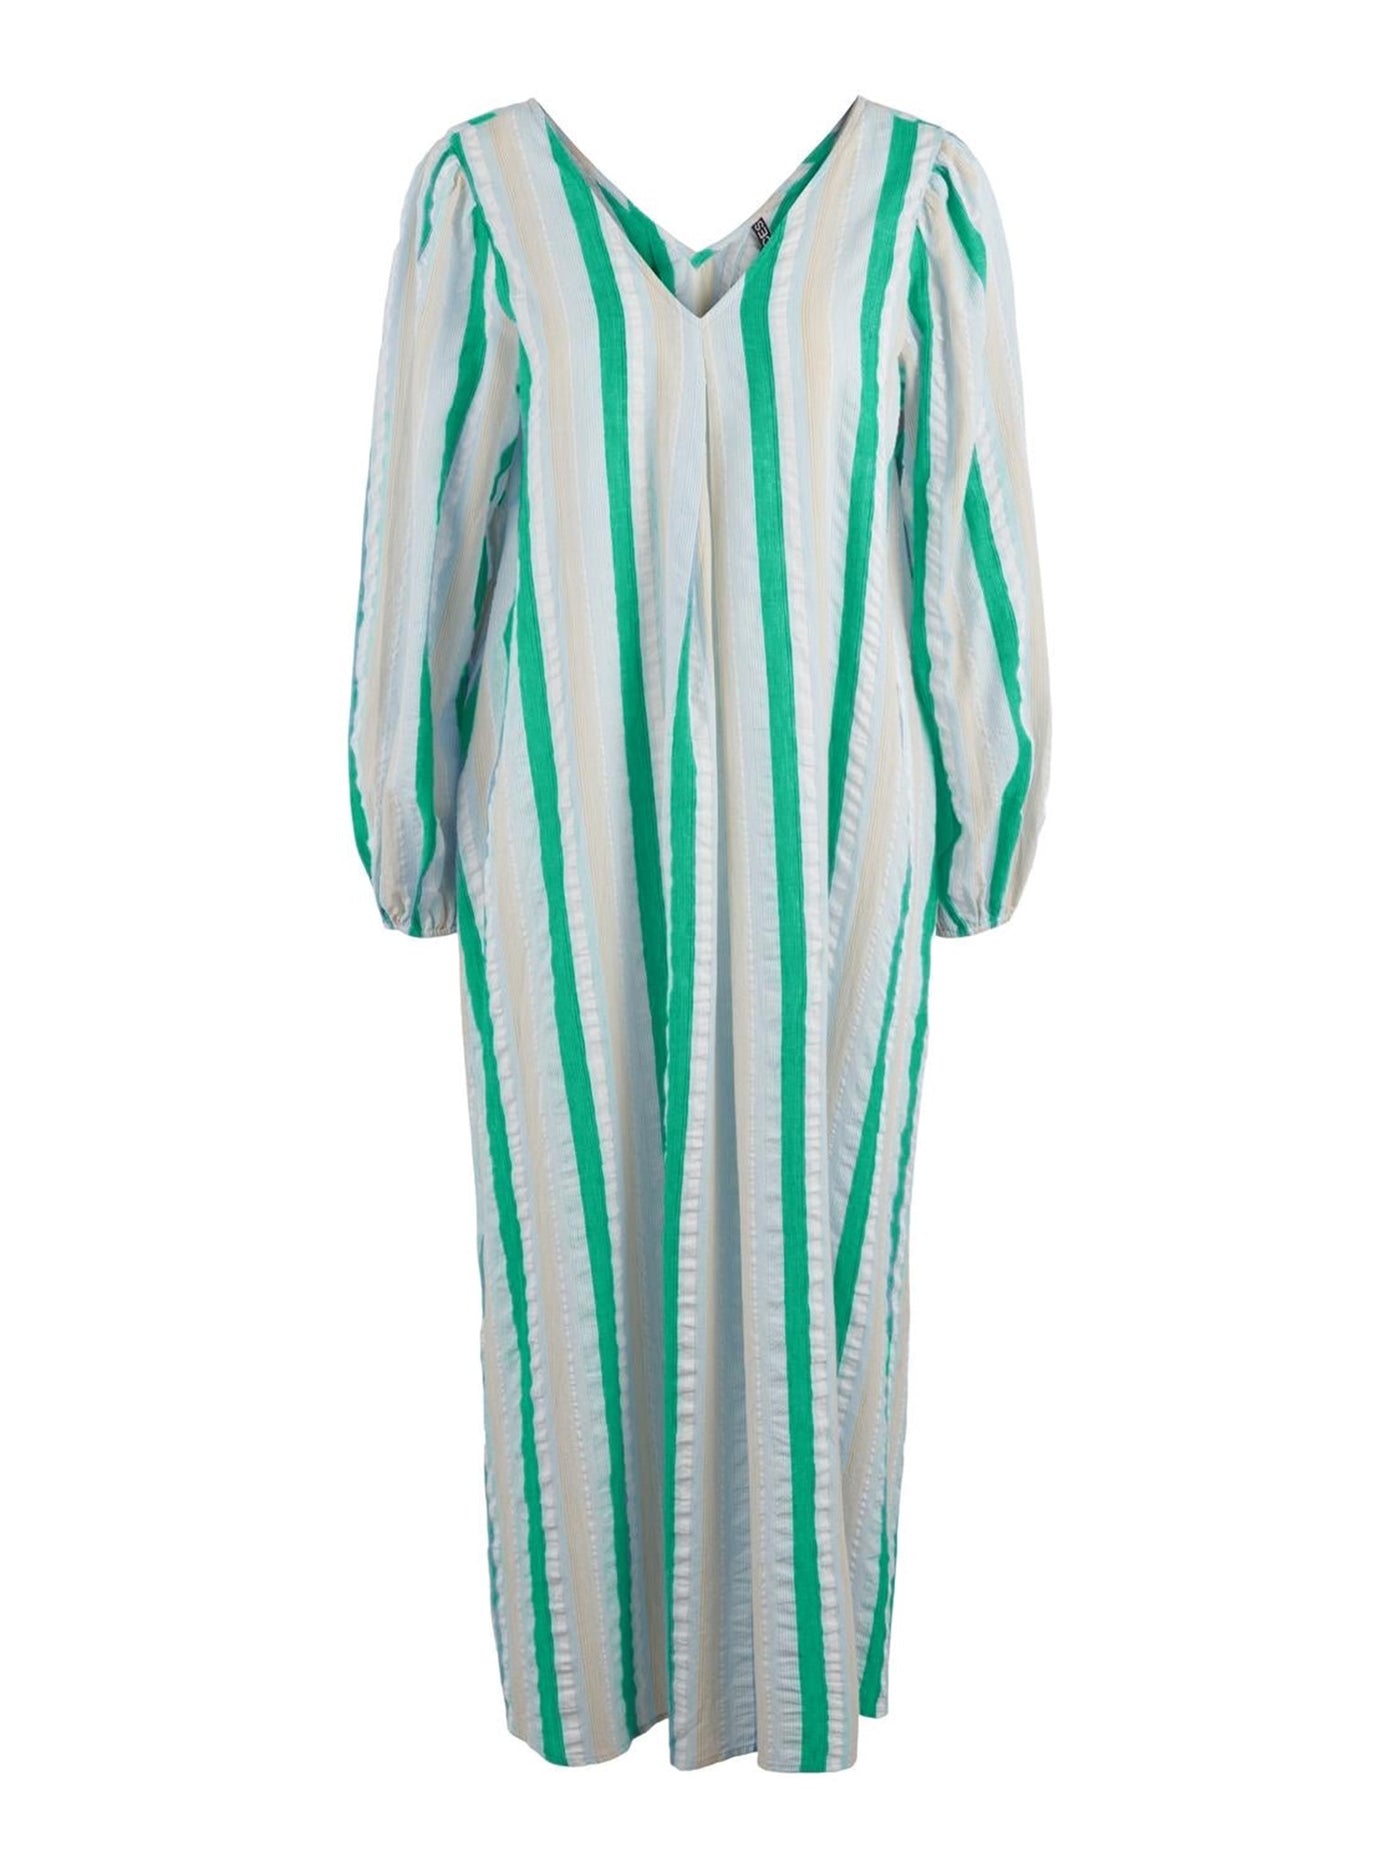 Fursa Midi Dress - Simply Green - PIECES